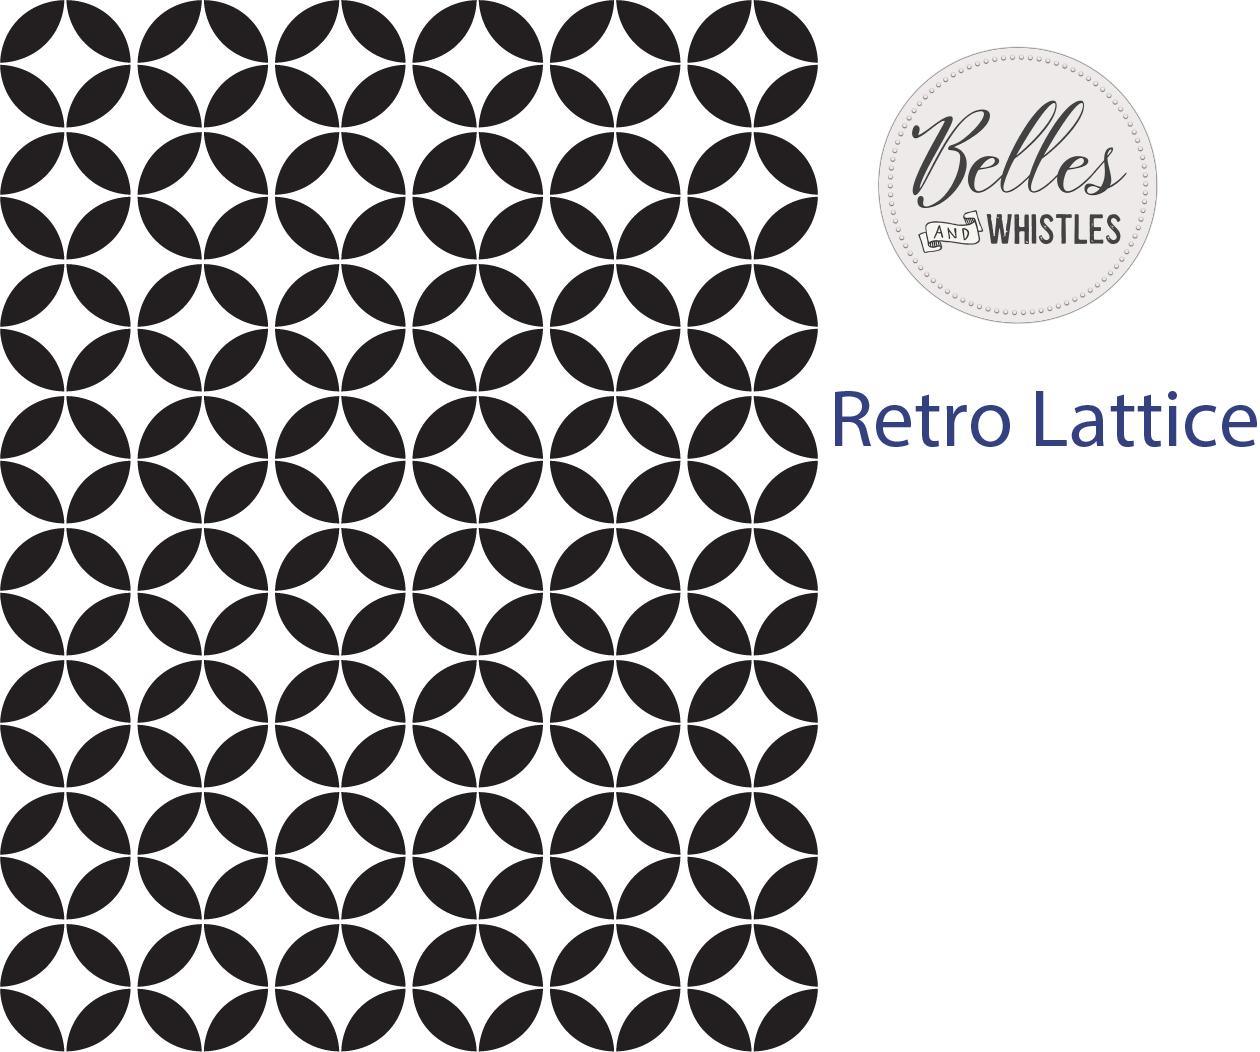 Belles & Whistles Retro Lattice Stencil